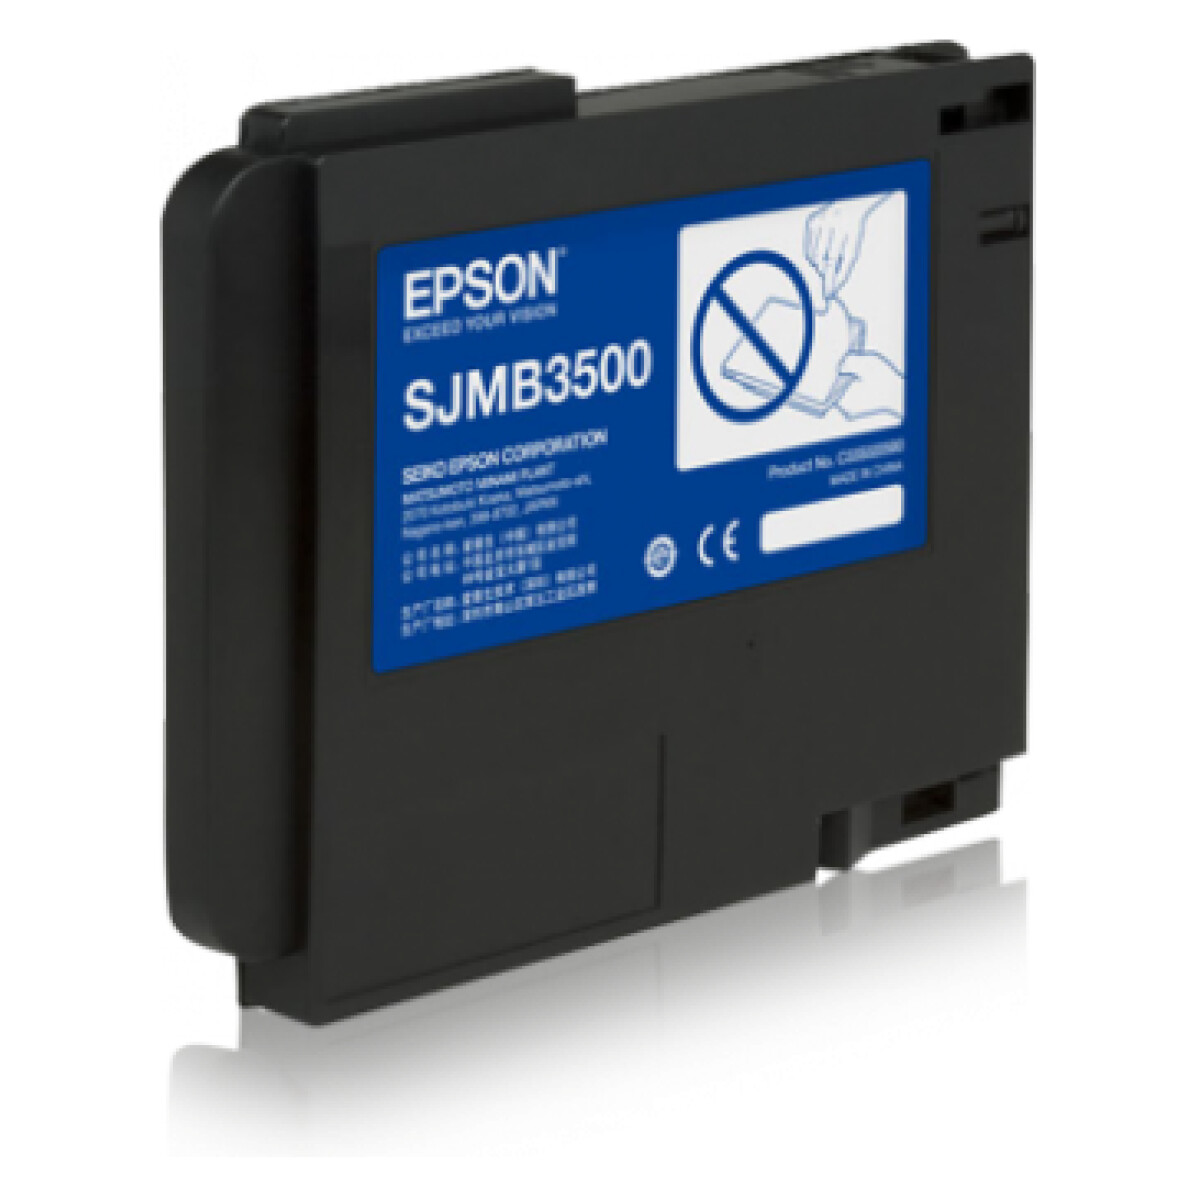 Epson - Maintenance box ColorWorks C3500 - SJMB3500